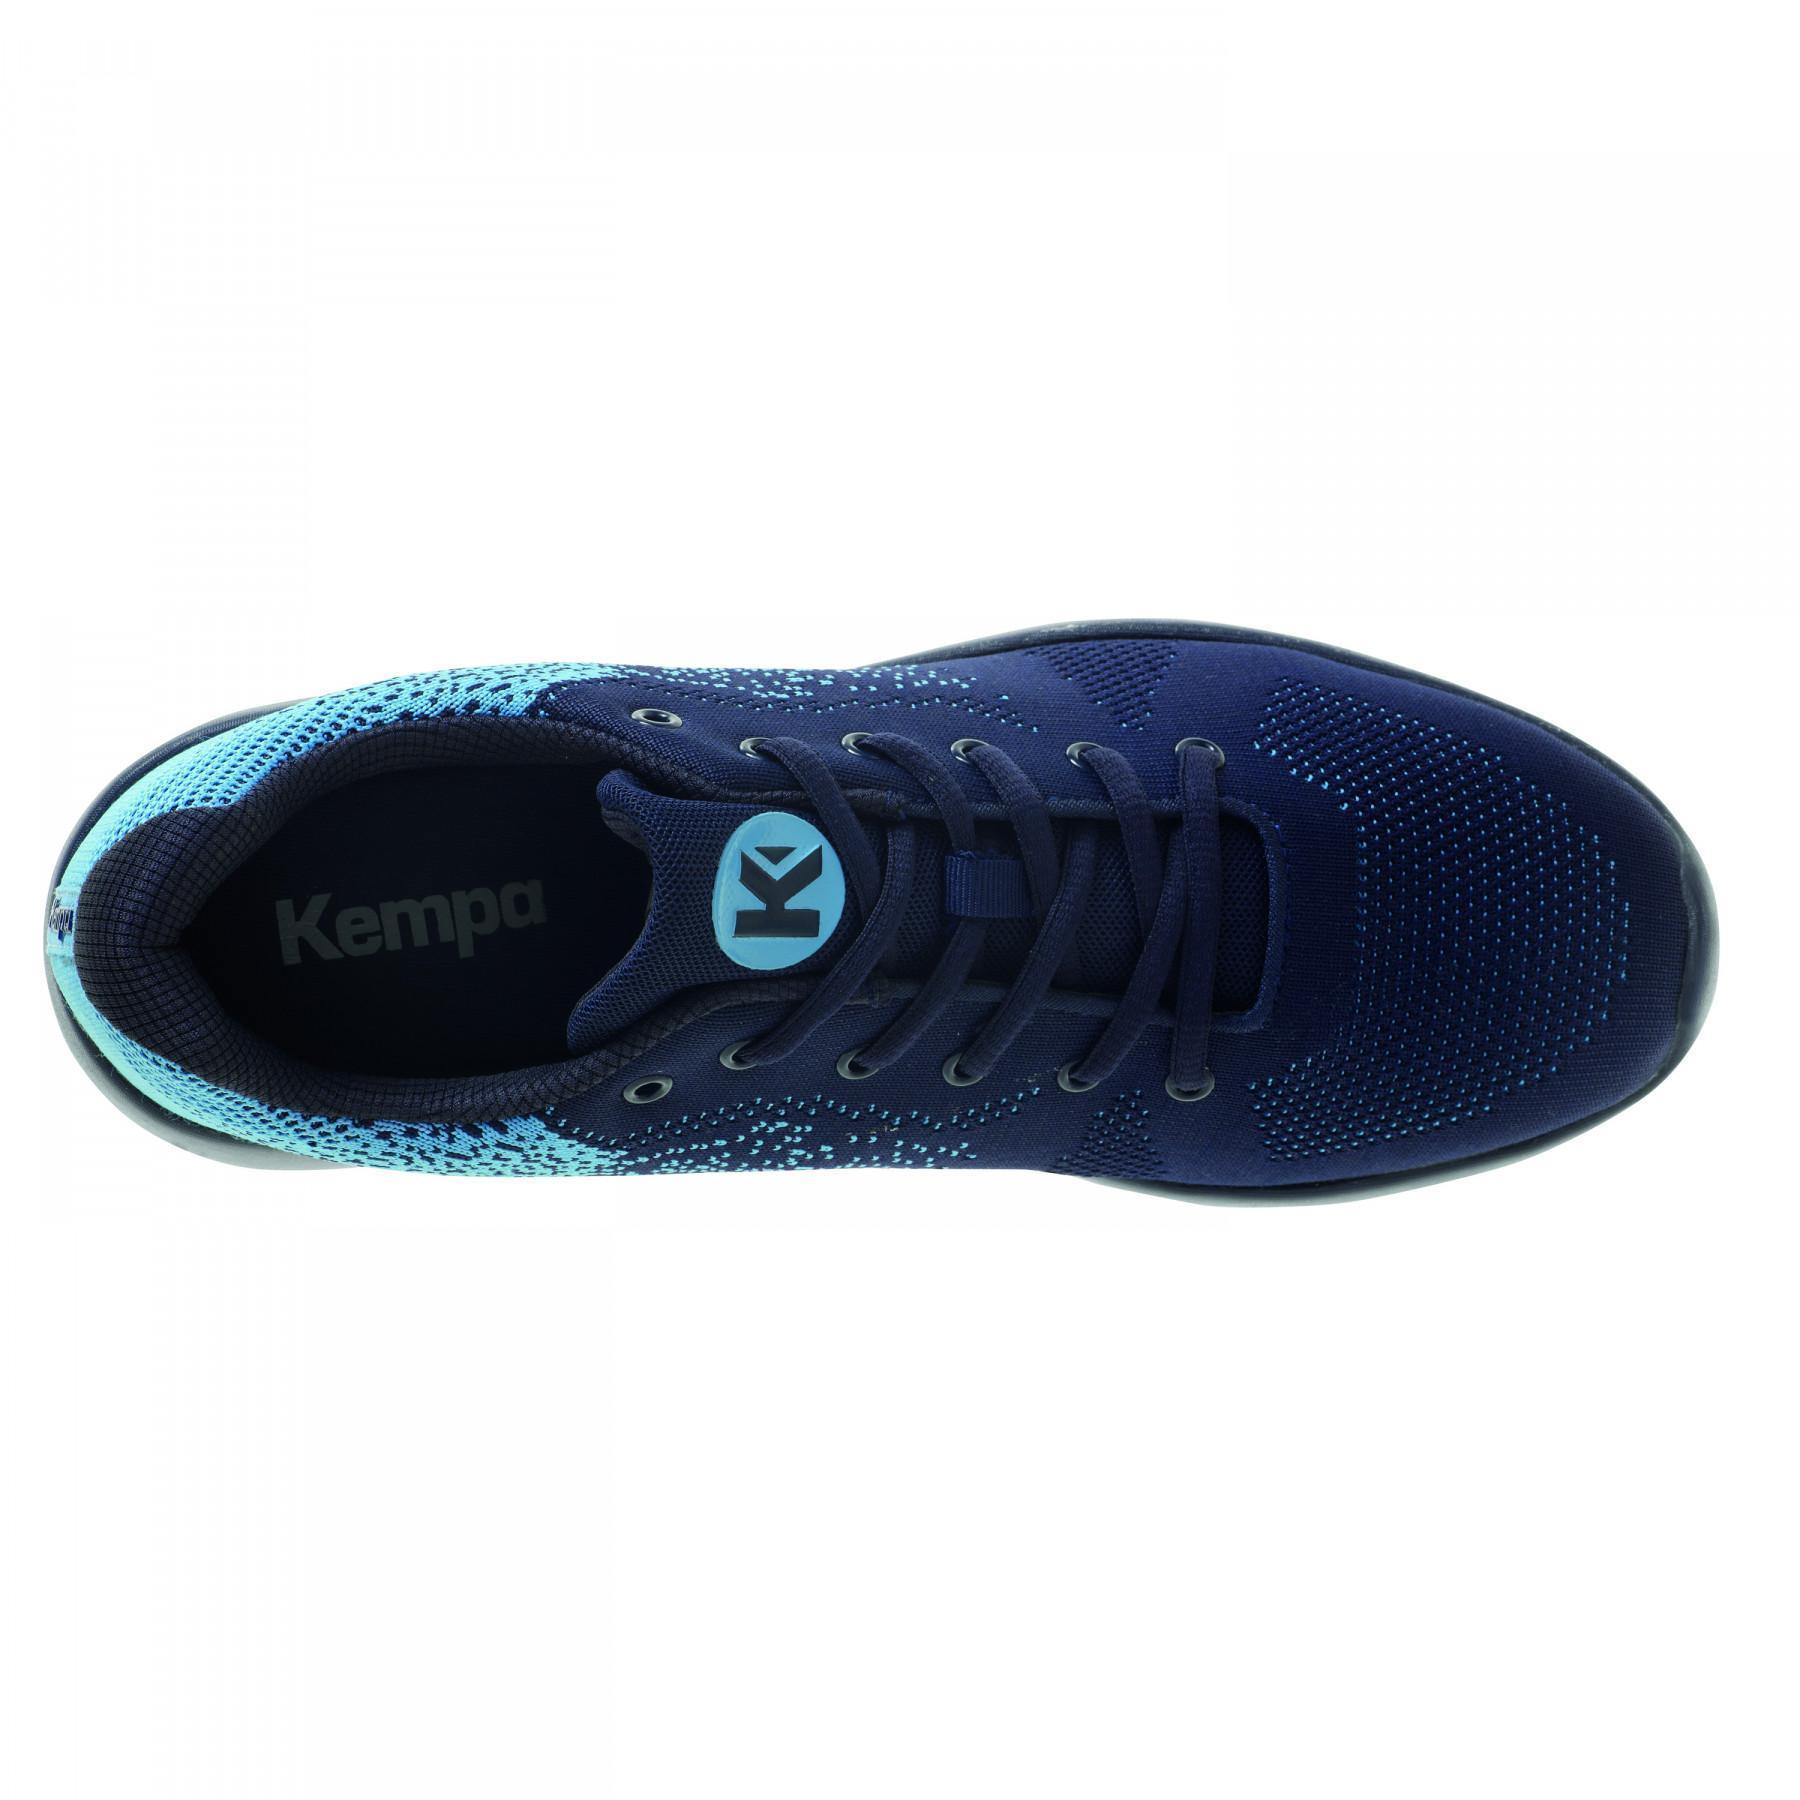 Chaussures Kempa K-Float